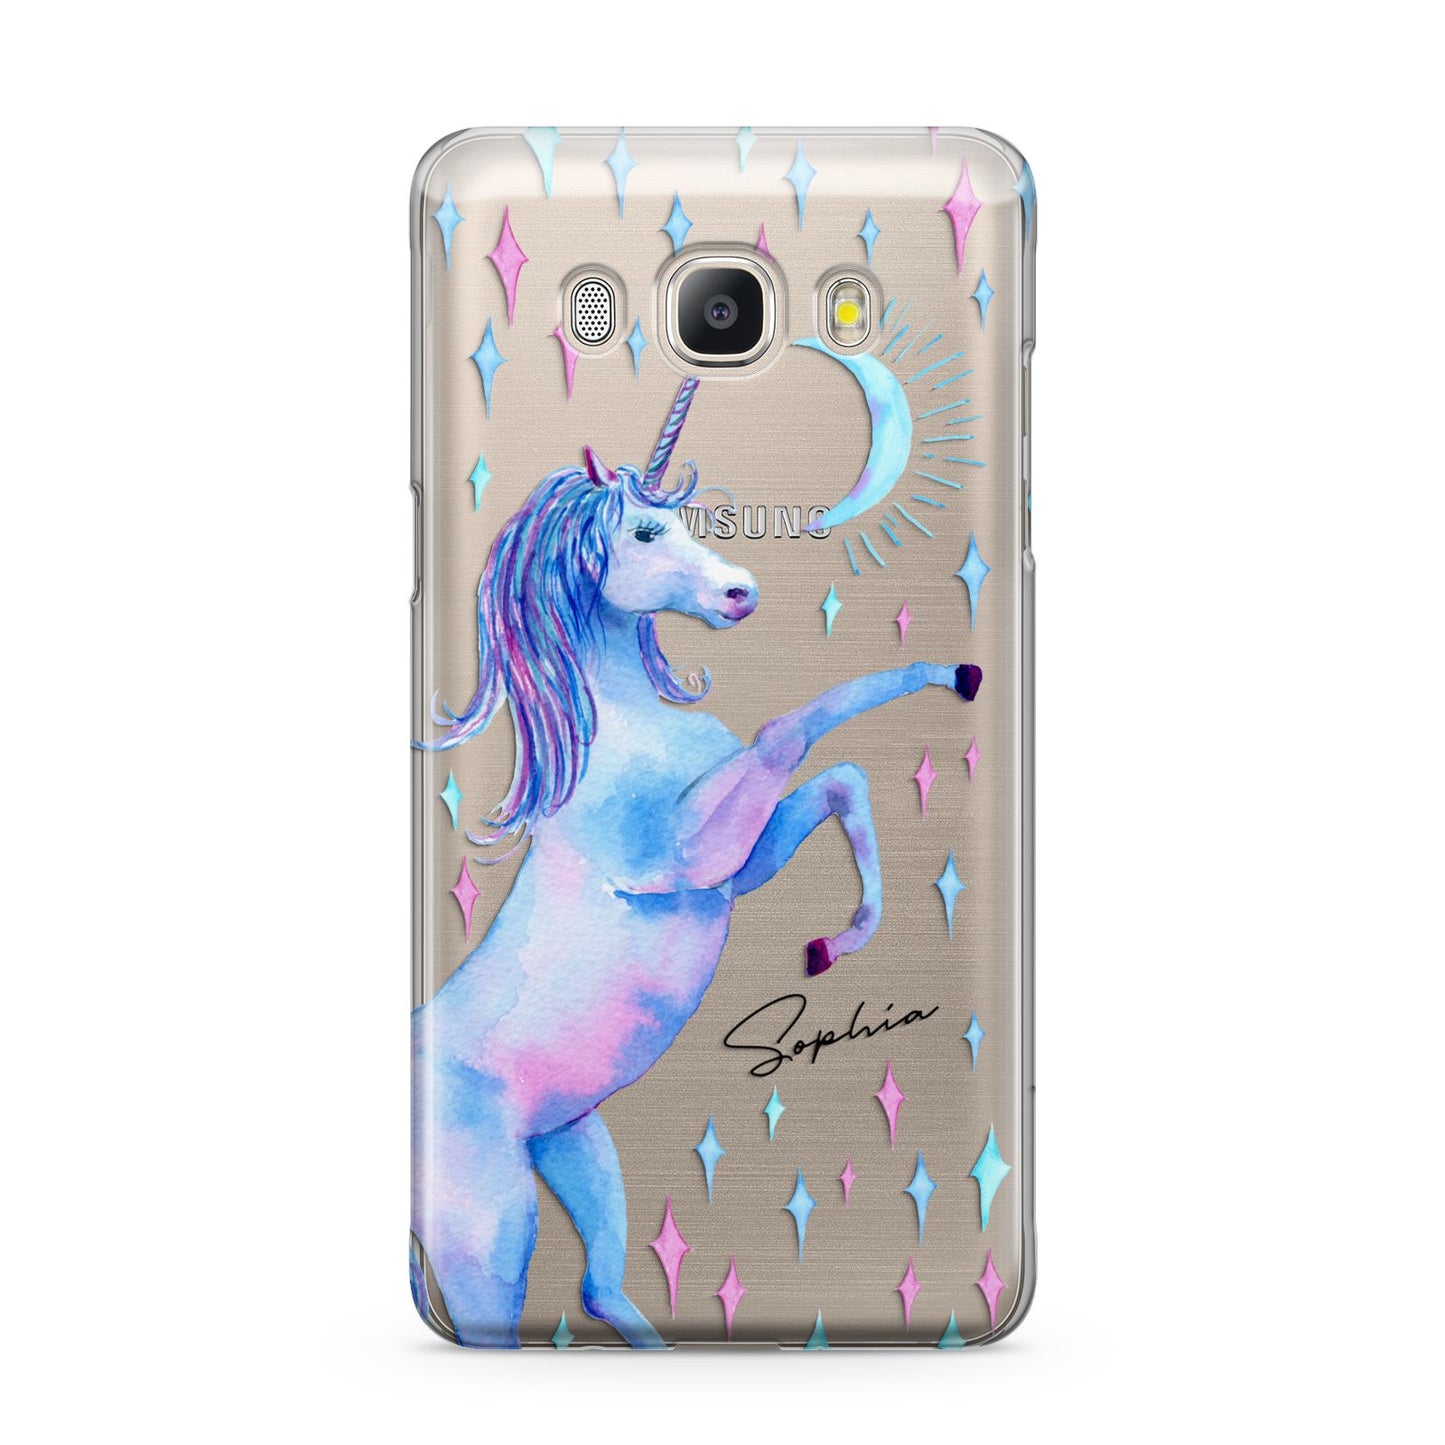 Personalised Unicorn Name Samsung Galaxy J5 2016 Case